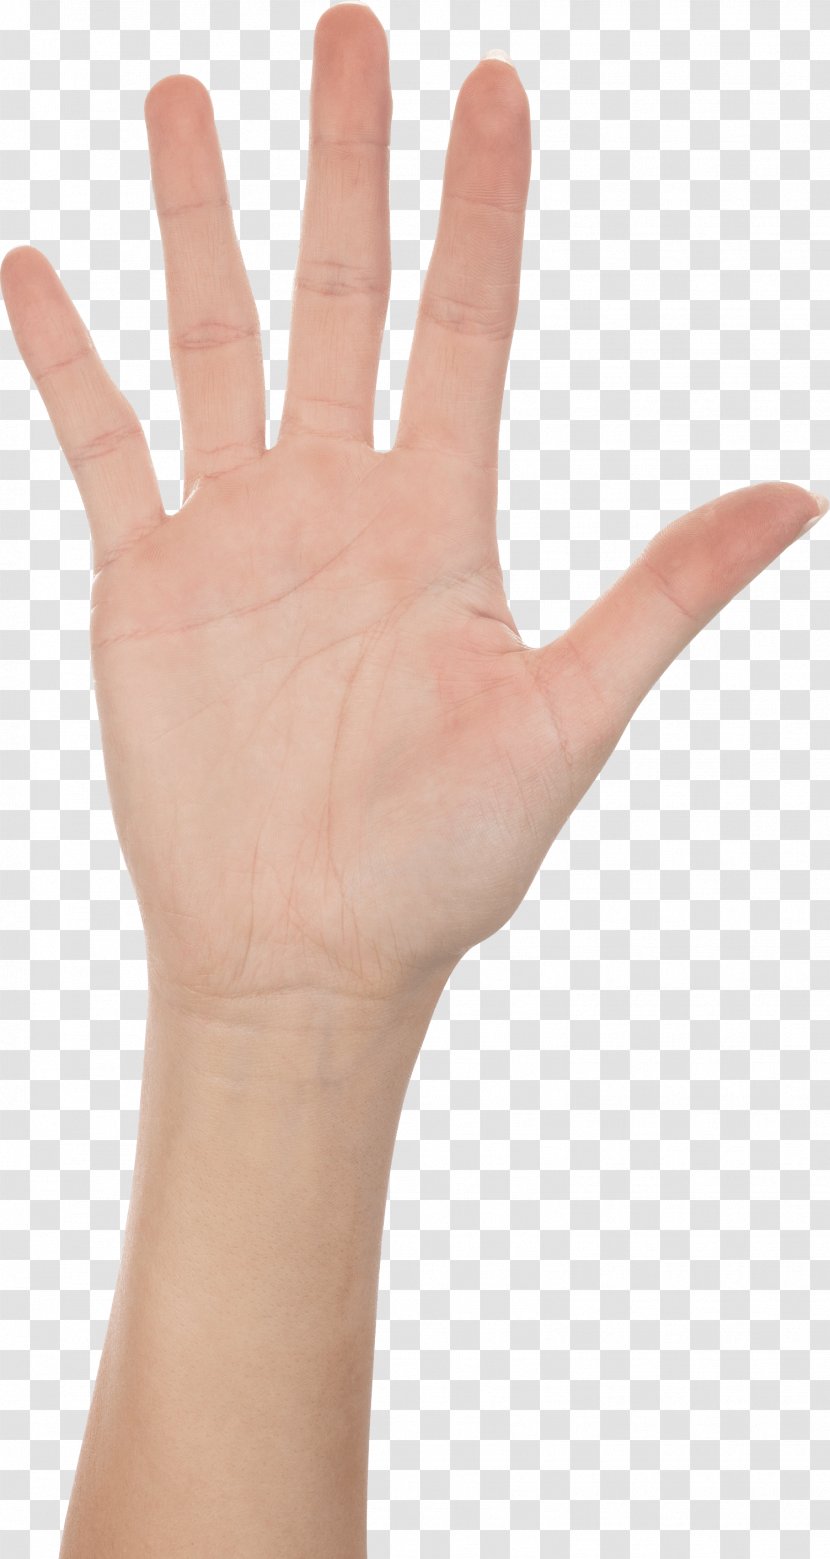 Thumb Hand Model Nail Glove - Language - Hands Image Transparent PNG